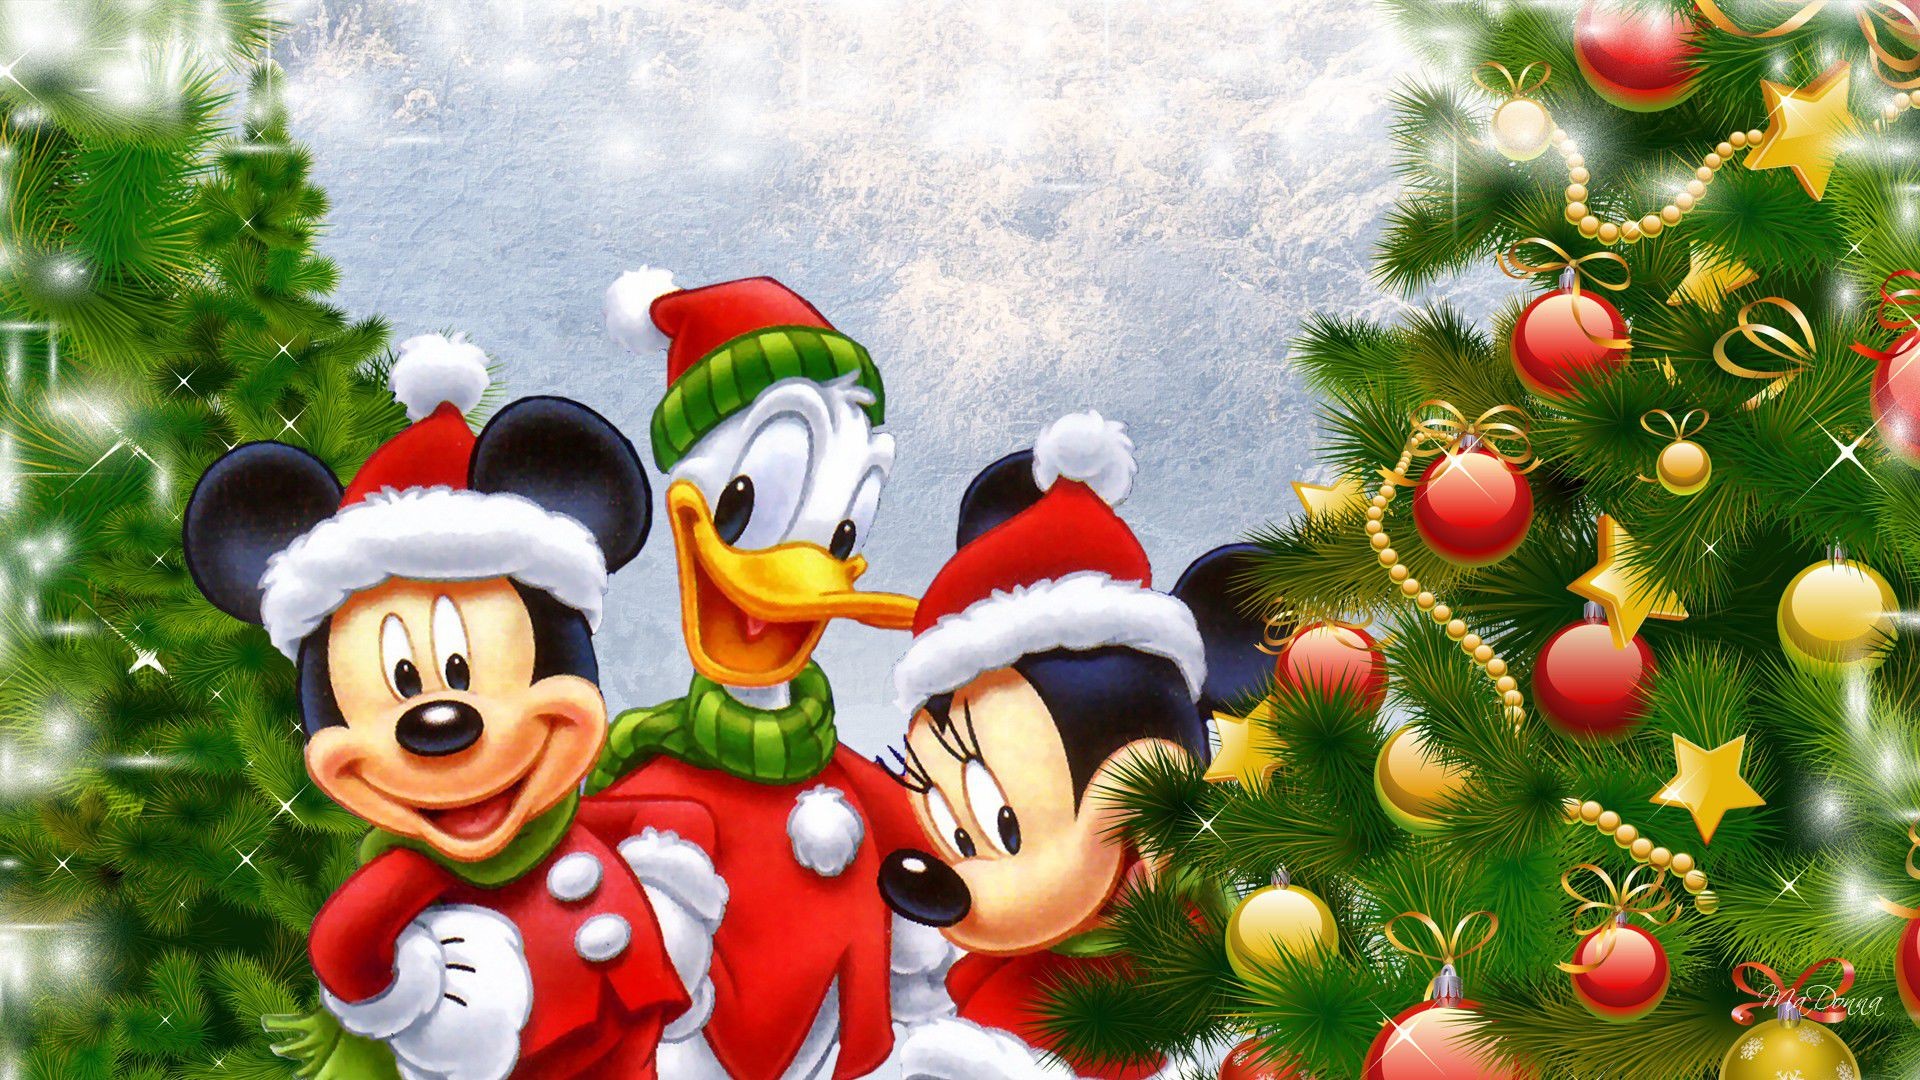 Disney Christmas Wallpaper and